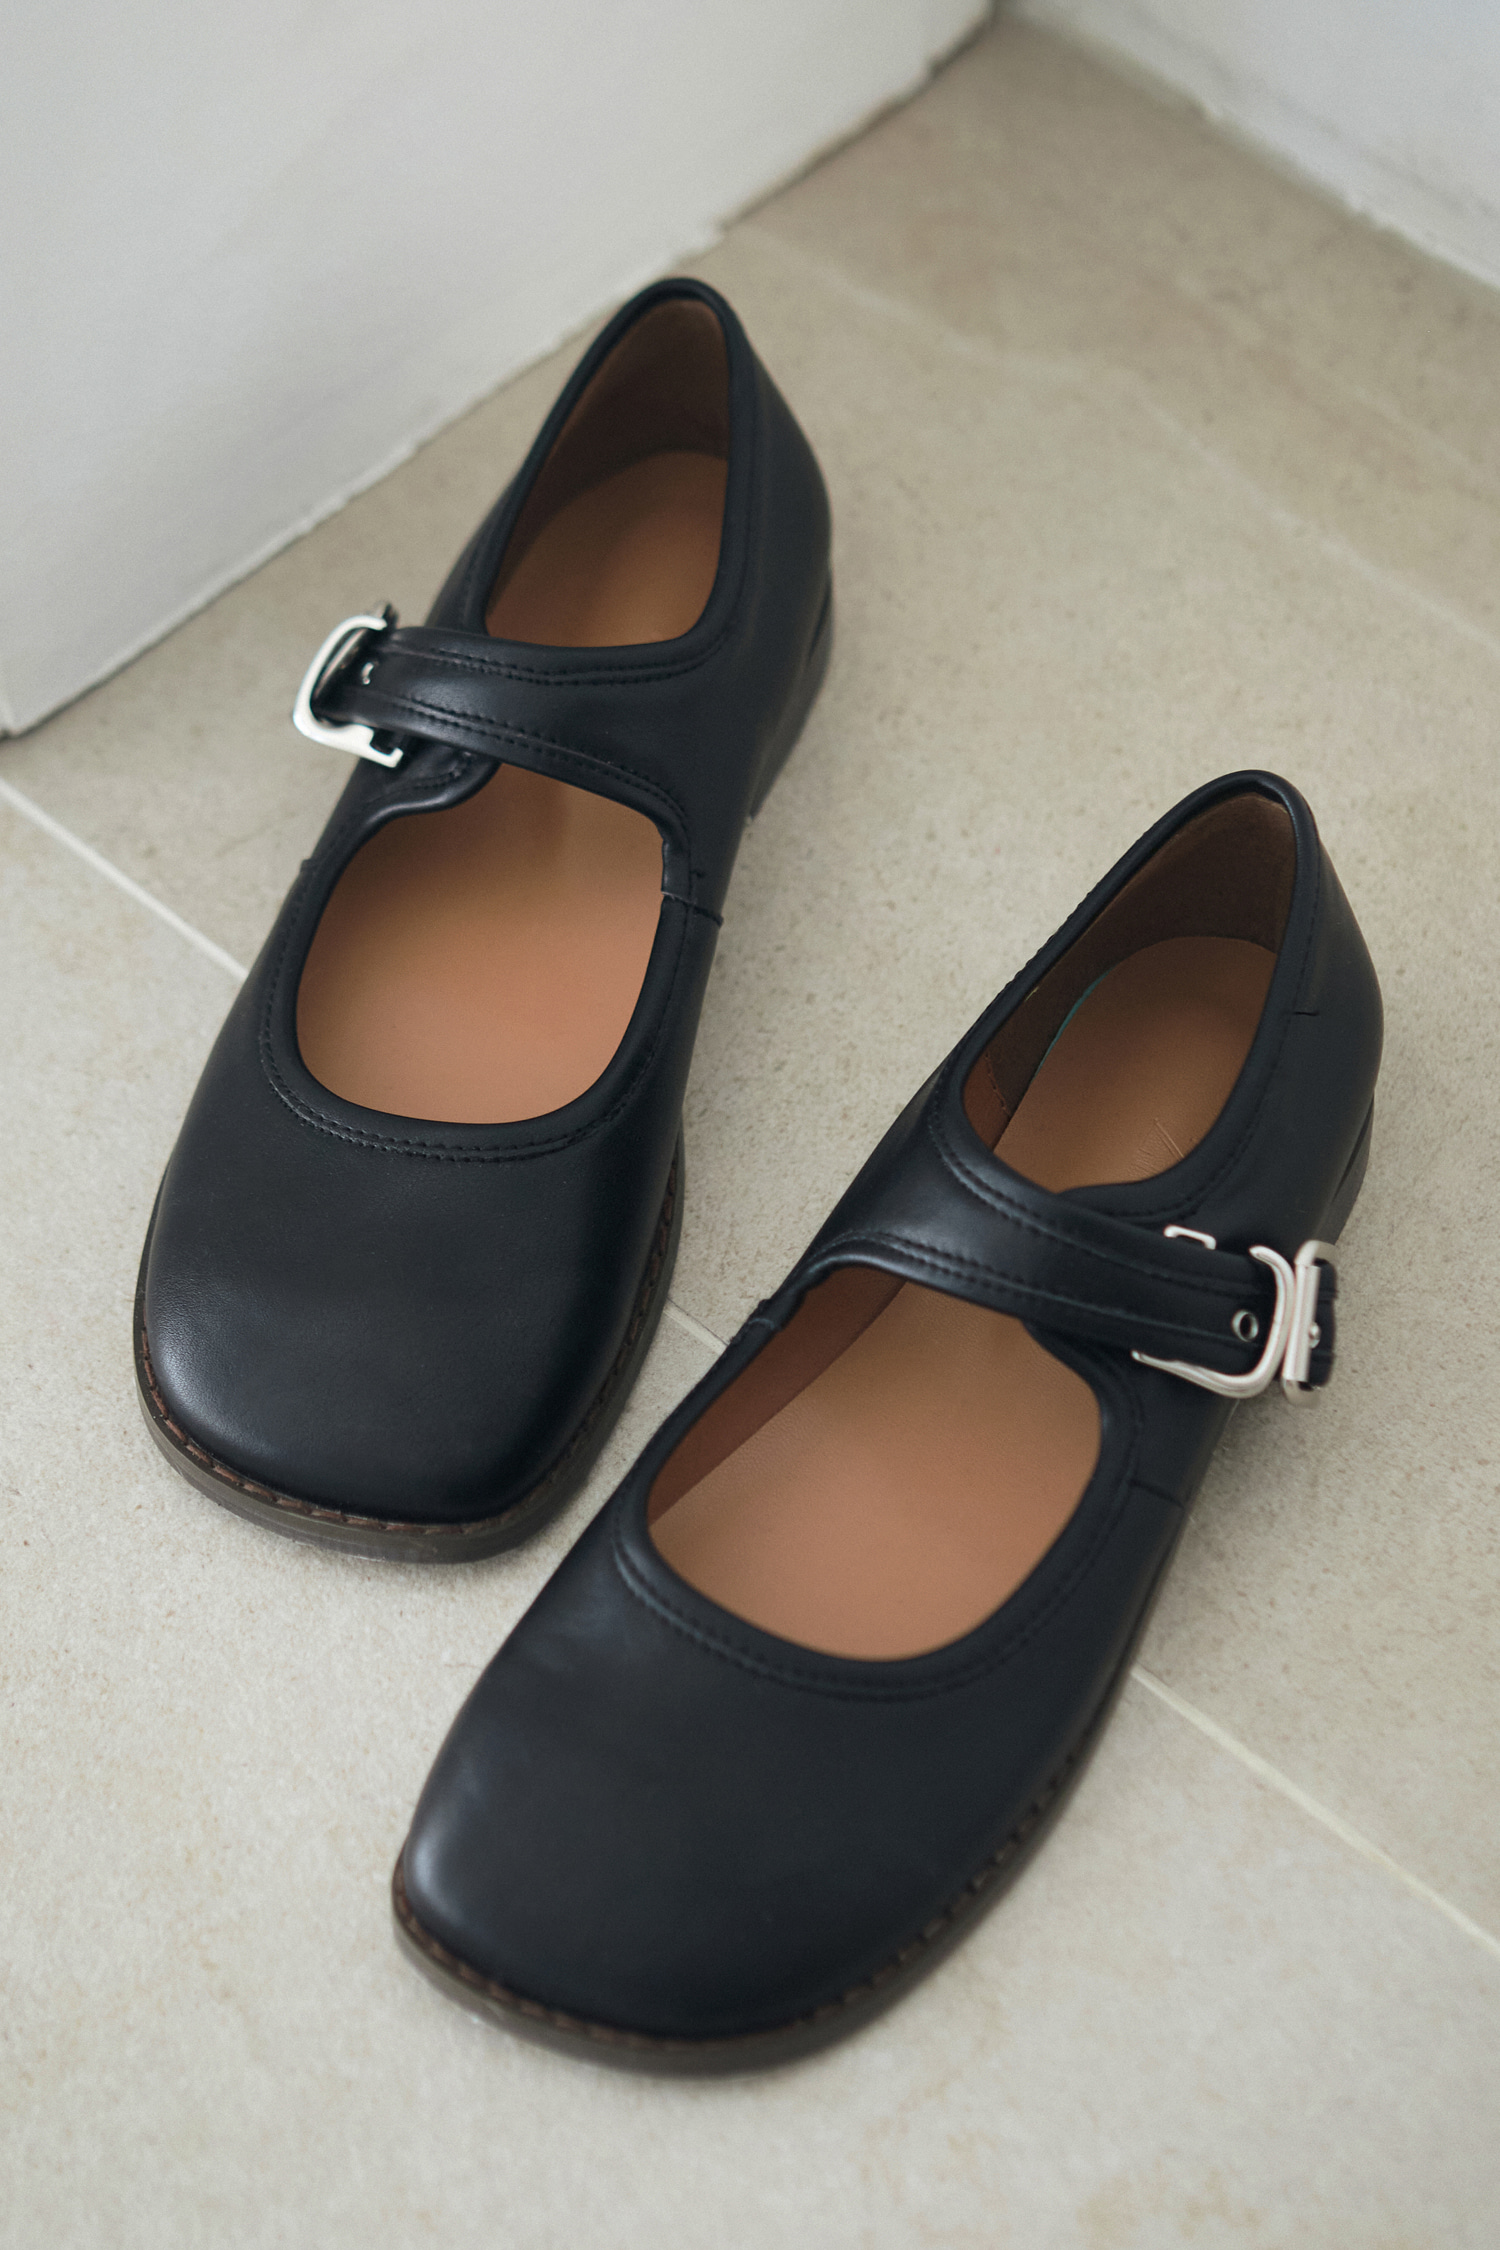 Mary jane flatshoes - black